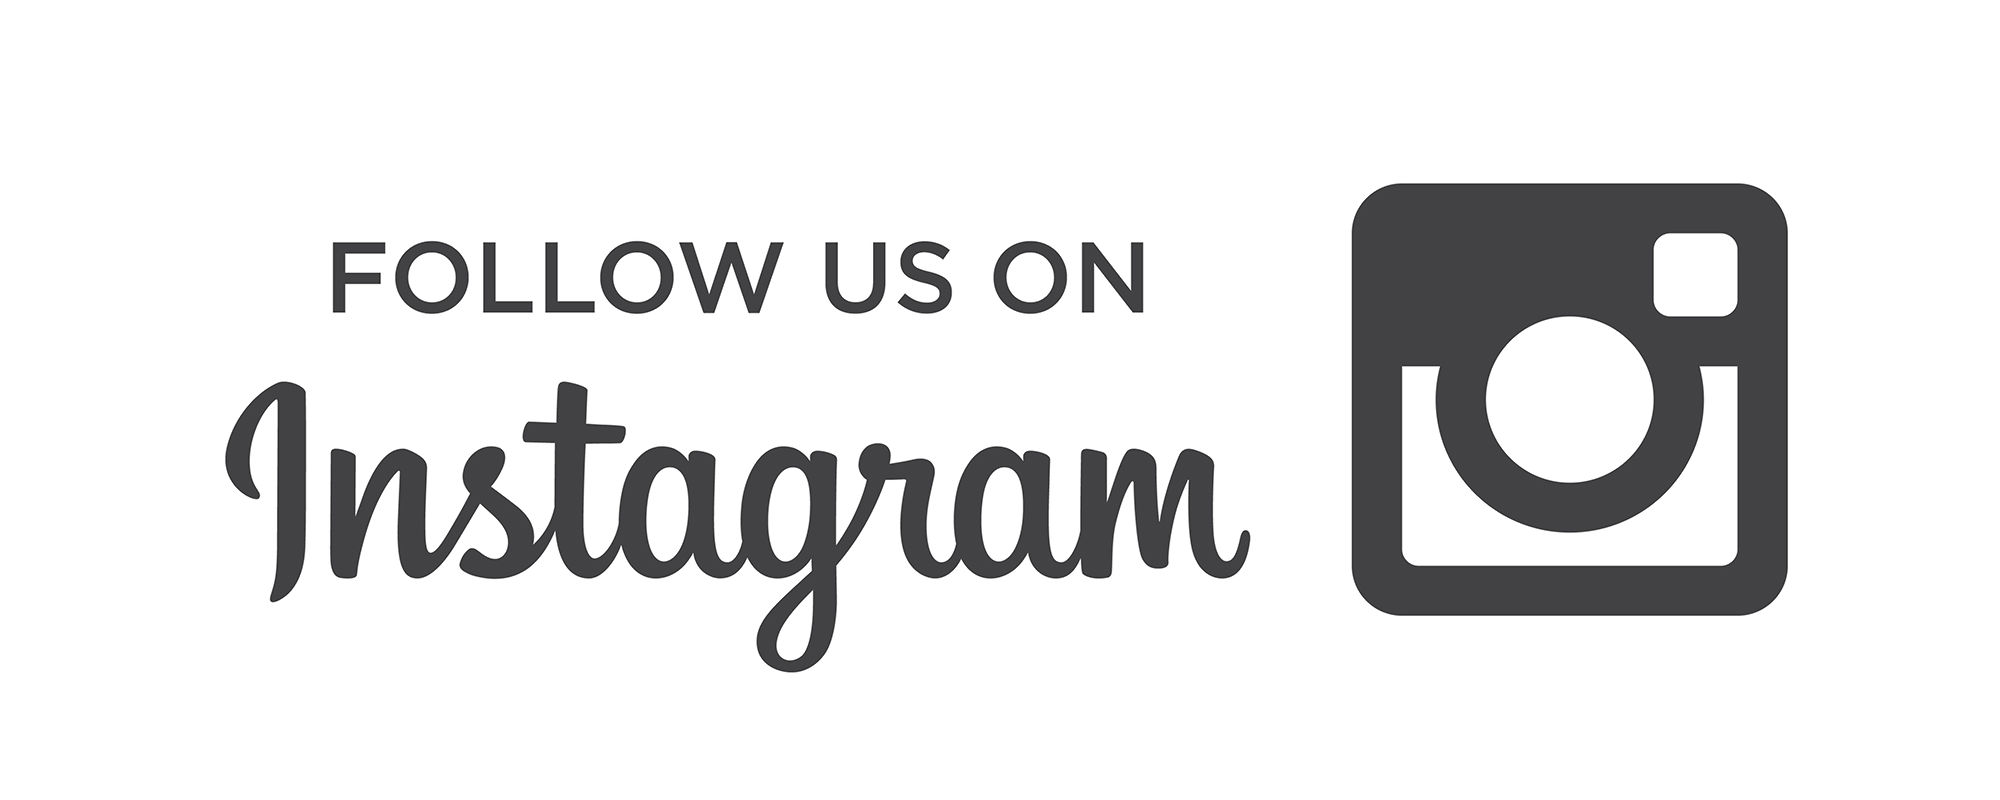 Follow Us On Instagram Logo - Follow On Instagram Icon Wwwpixsharkcom Images Logo Image - Free ...